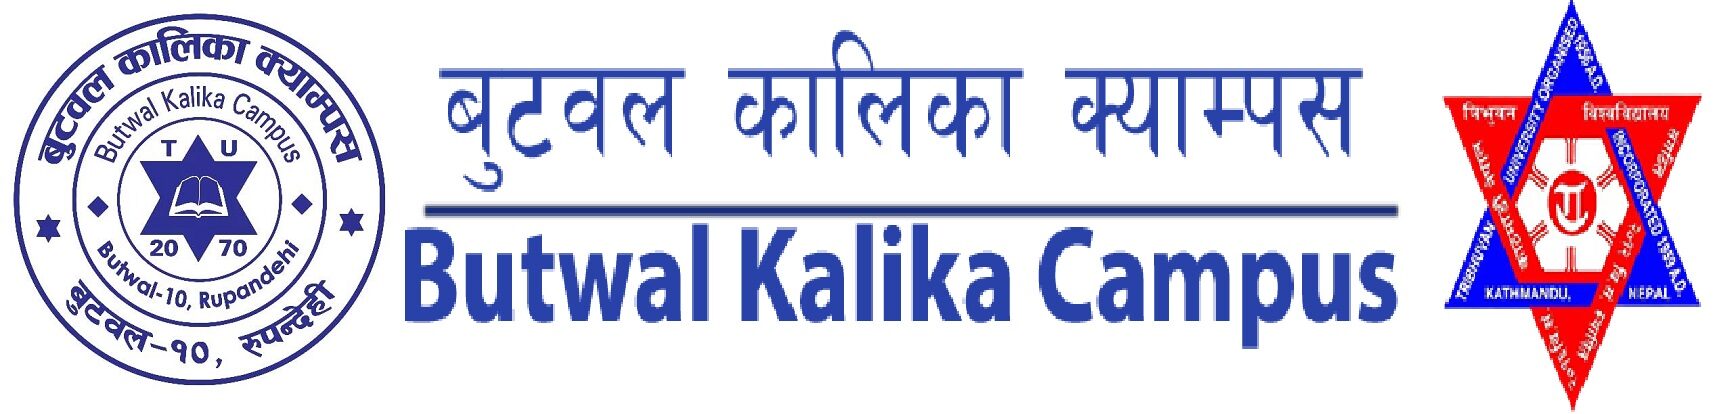 Butwal Kalika Campus